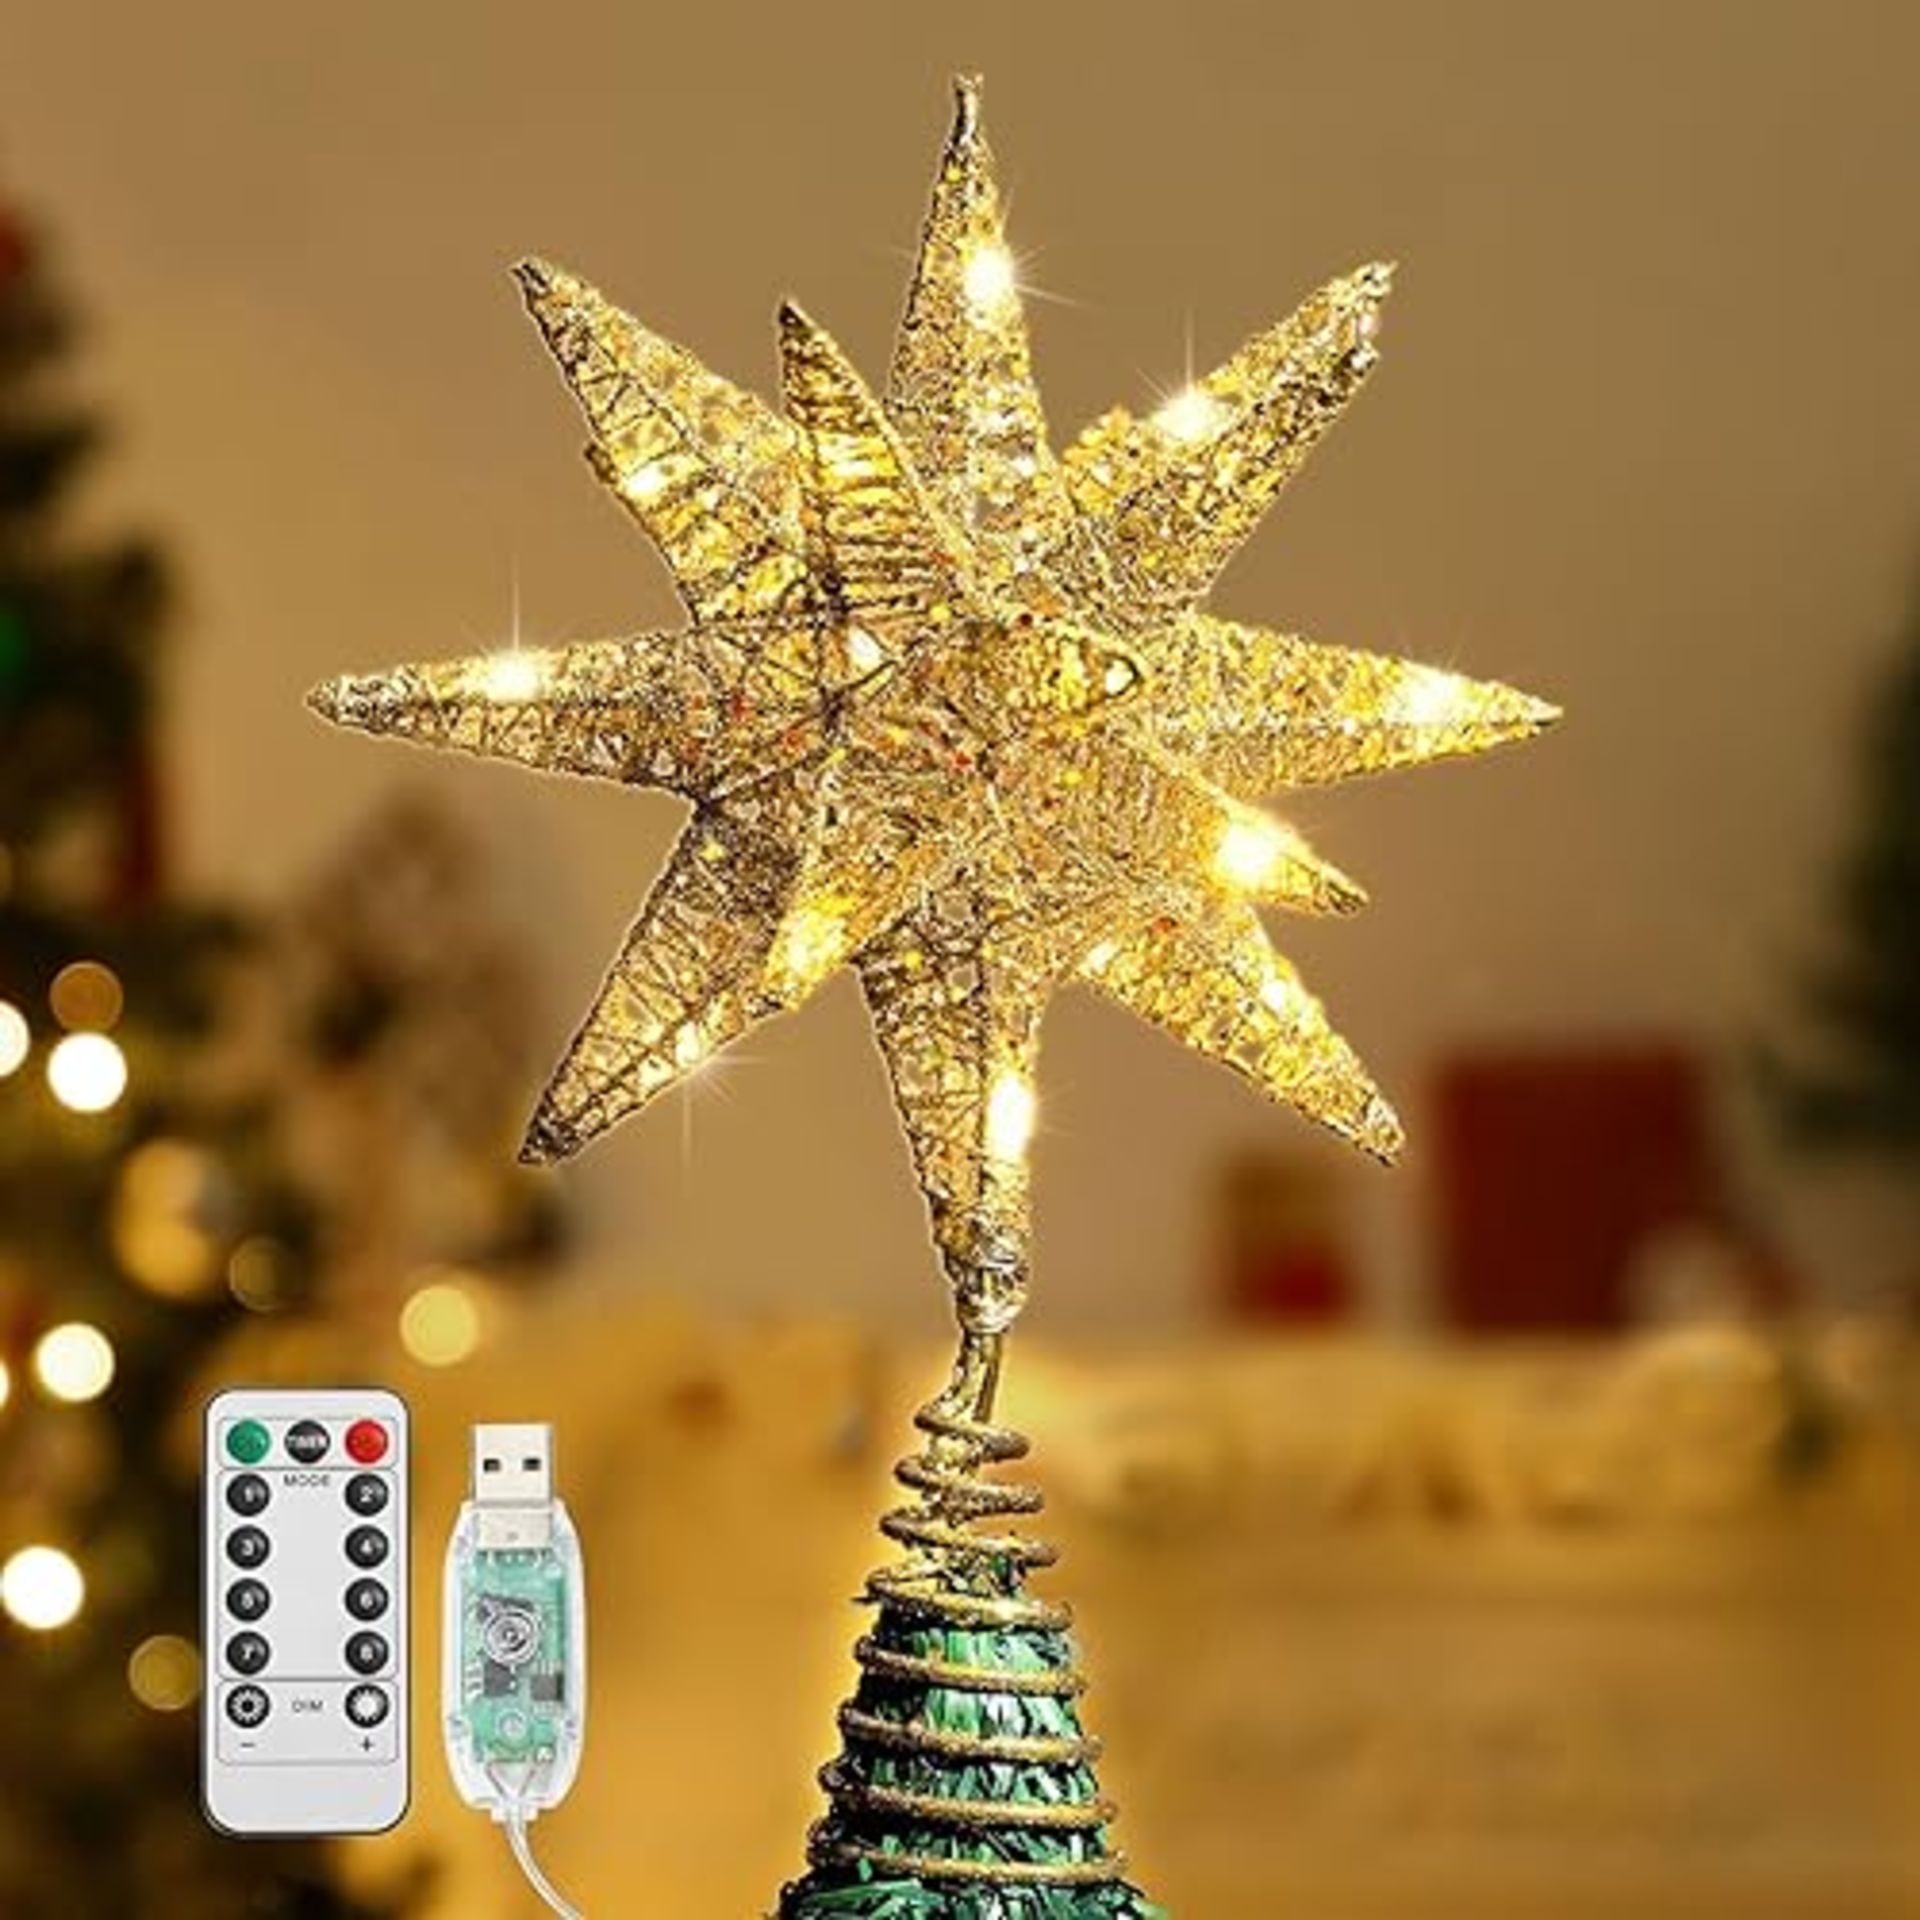 Lewondr Christmas Star Tree Topper, 3D Geometric Star USB Powered Remote Controlled Treetop Star wi